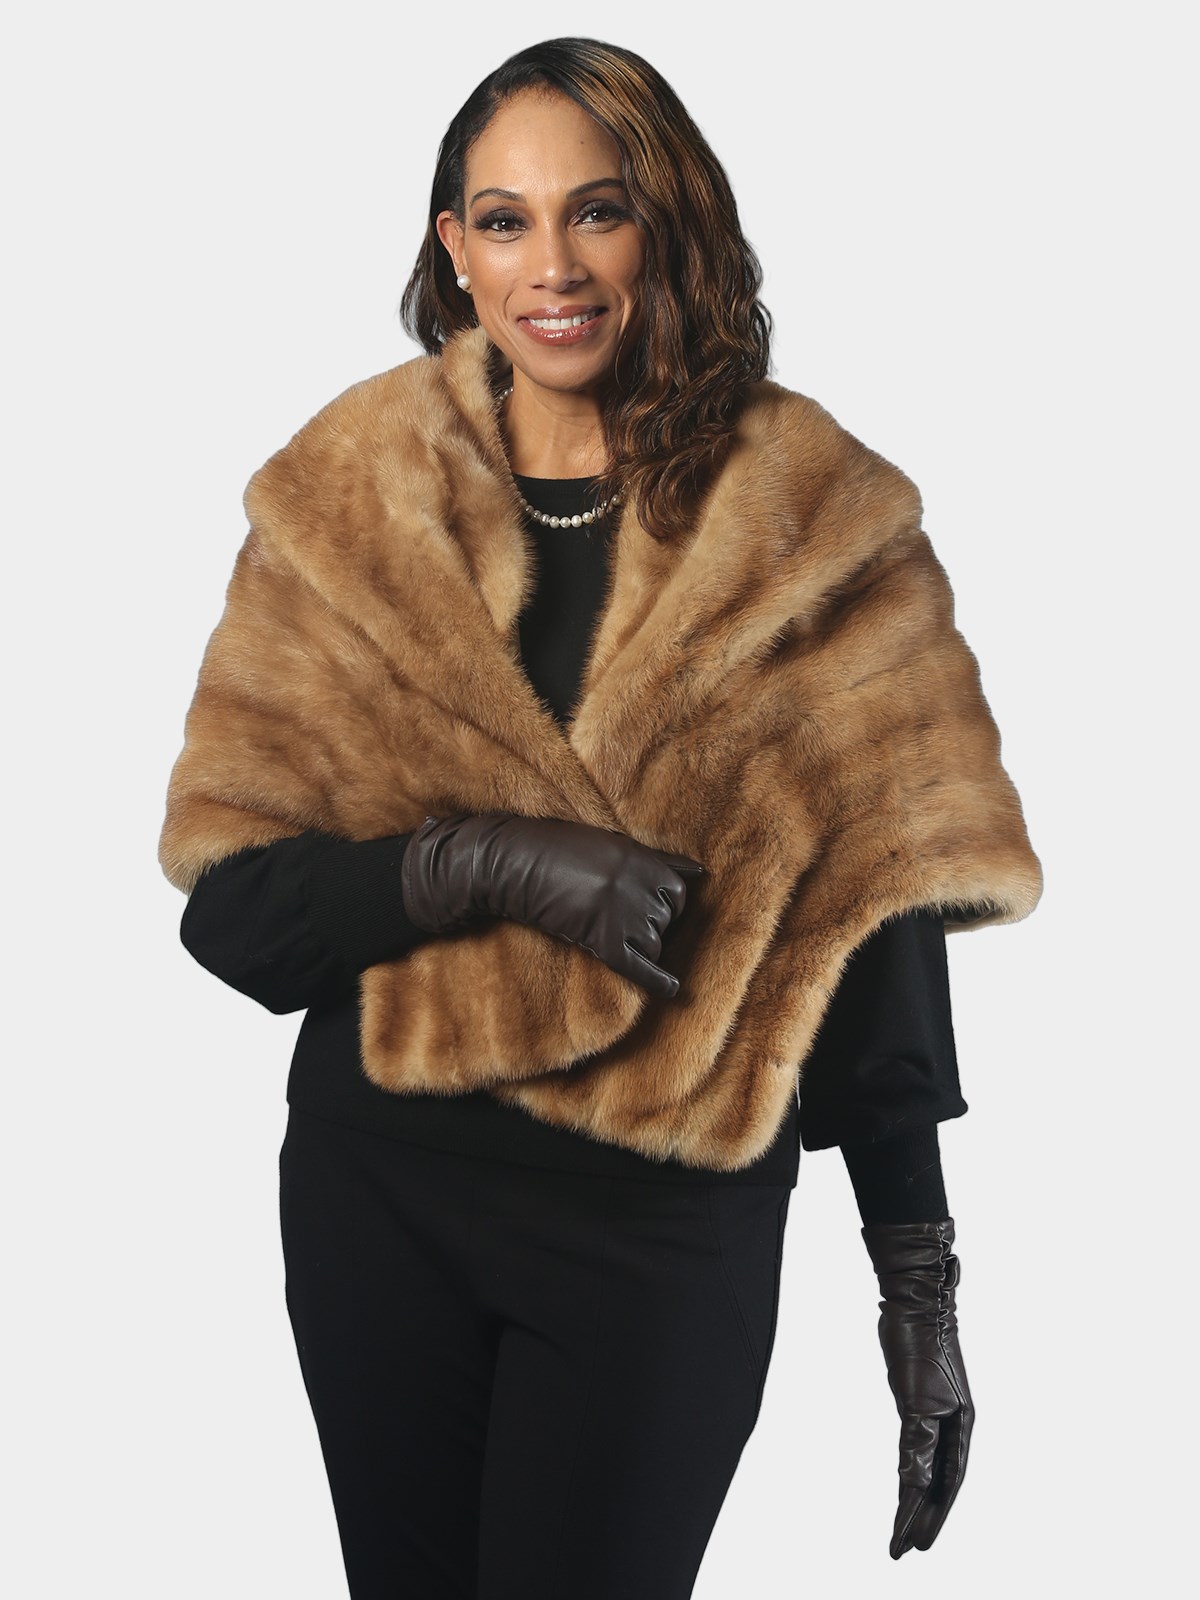 Below $500 Women's Fur and Mink Coats and Jackets